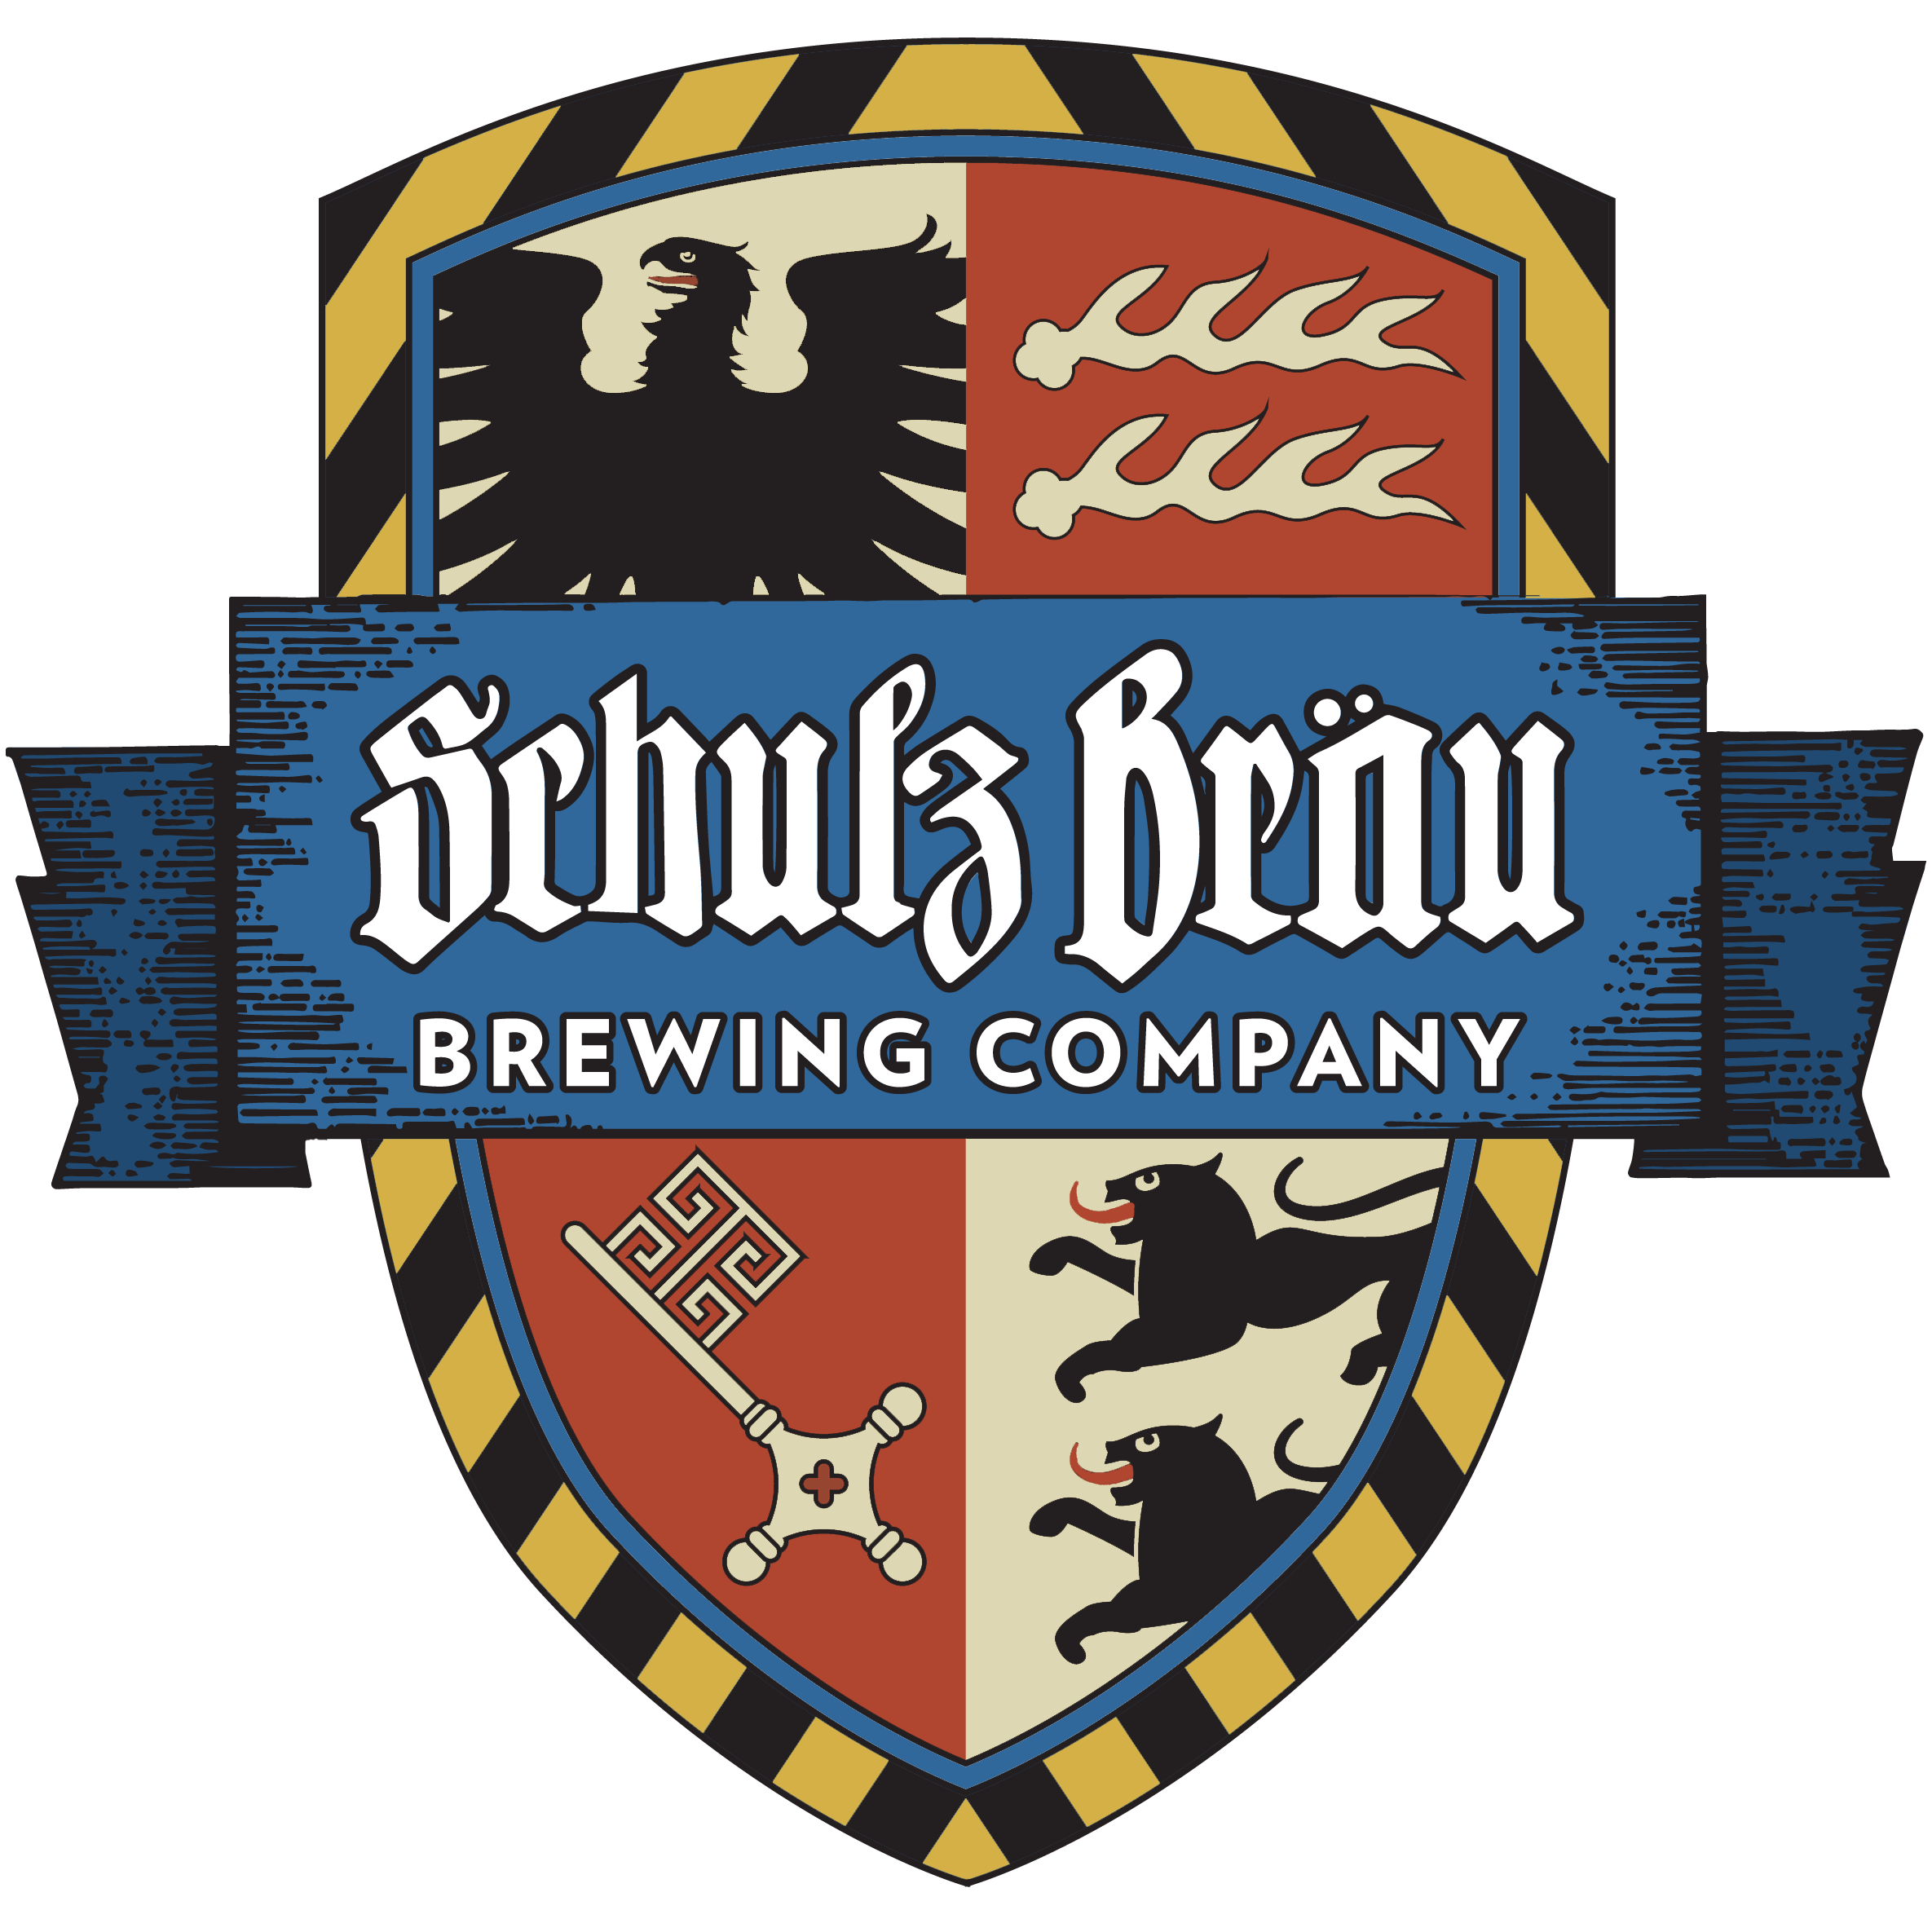 Schulz Brau Brewing Company